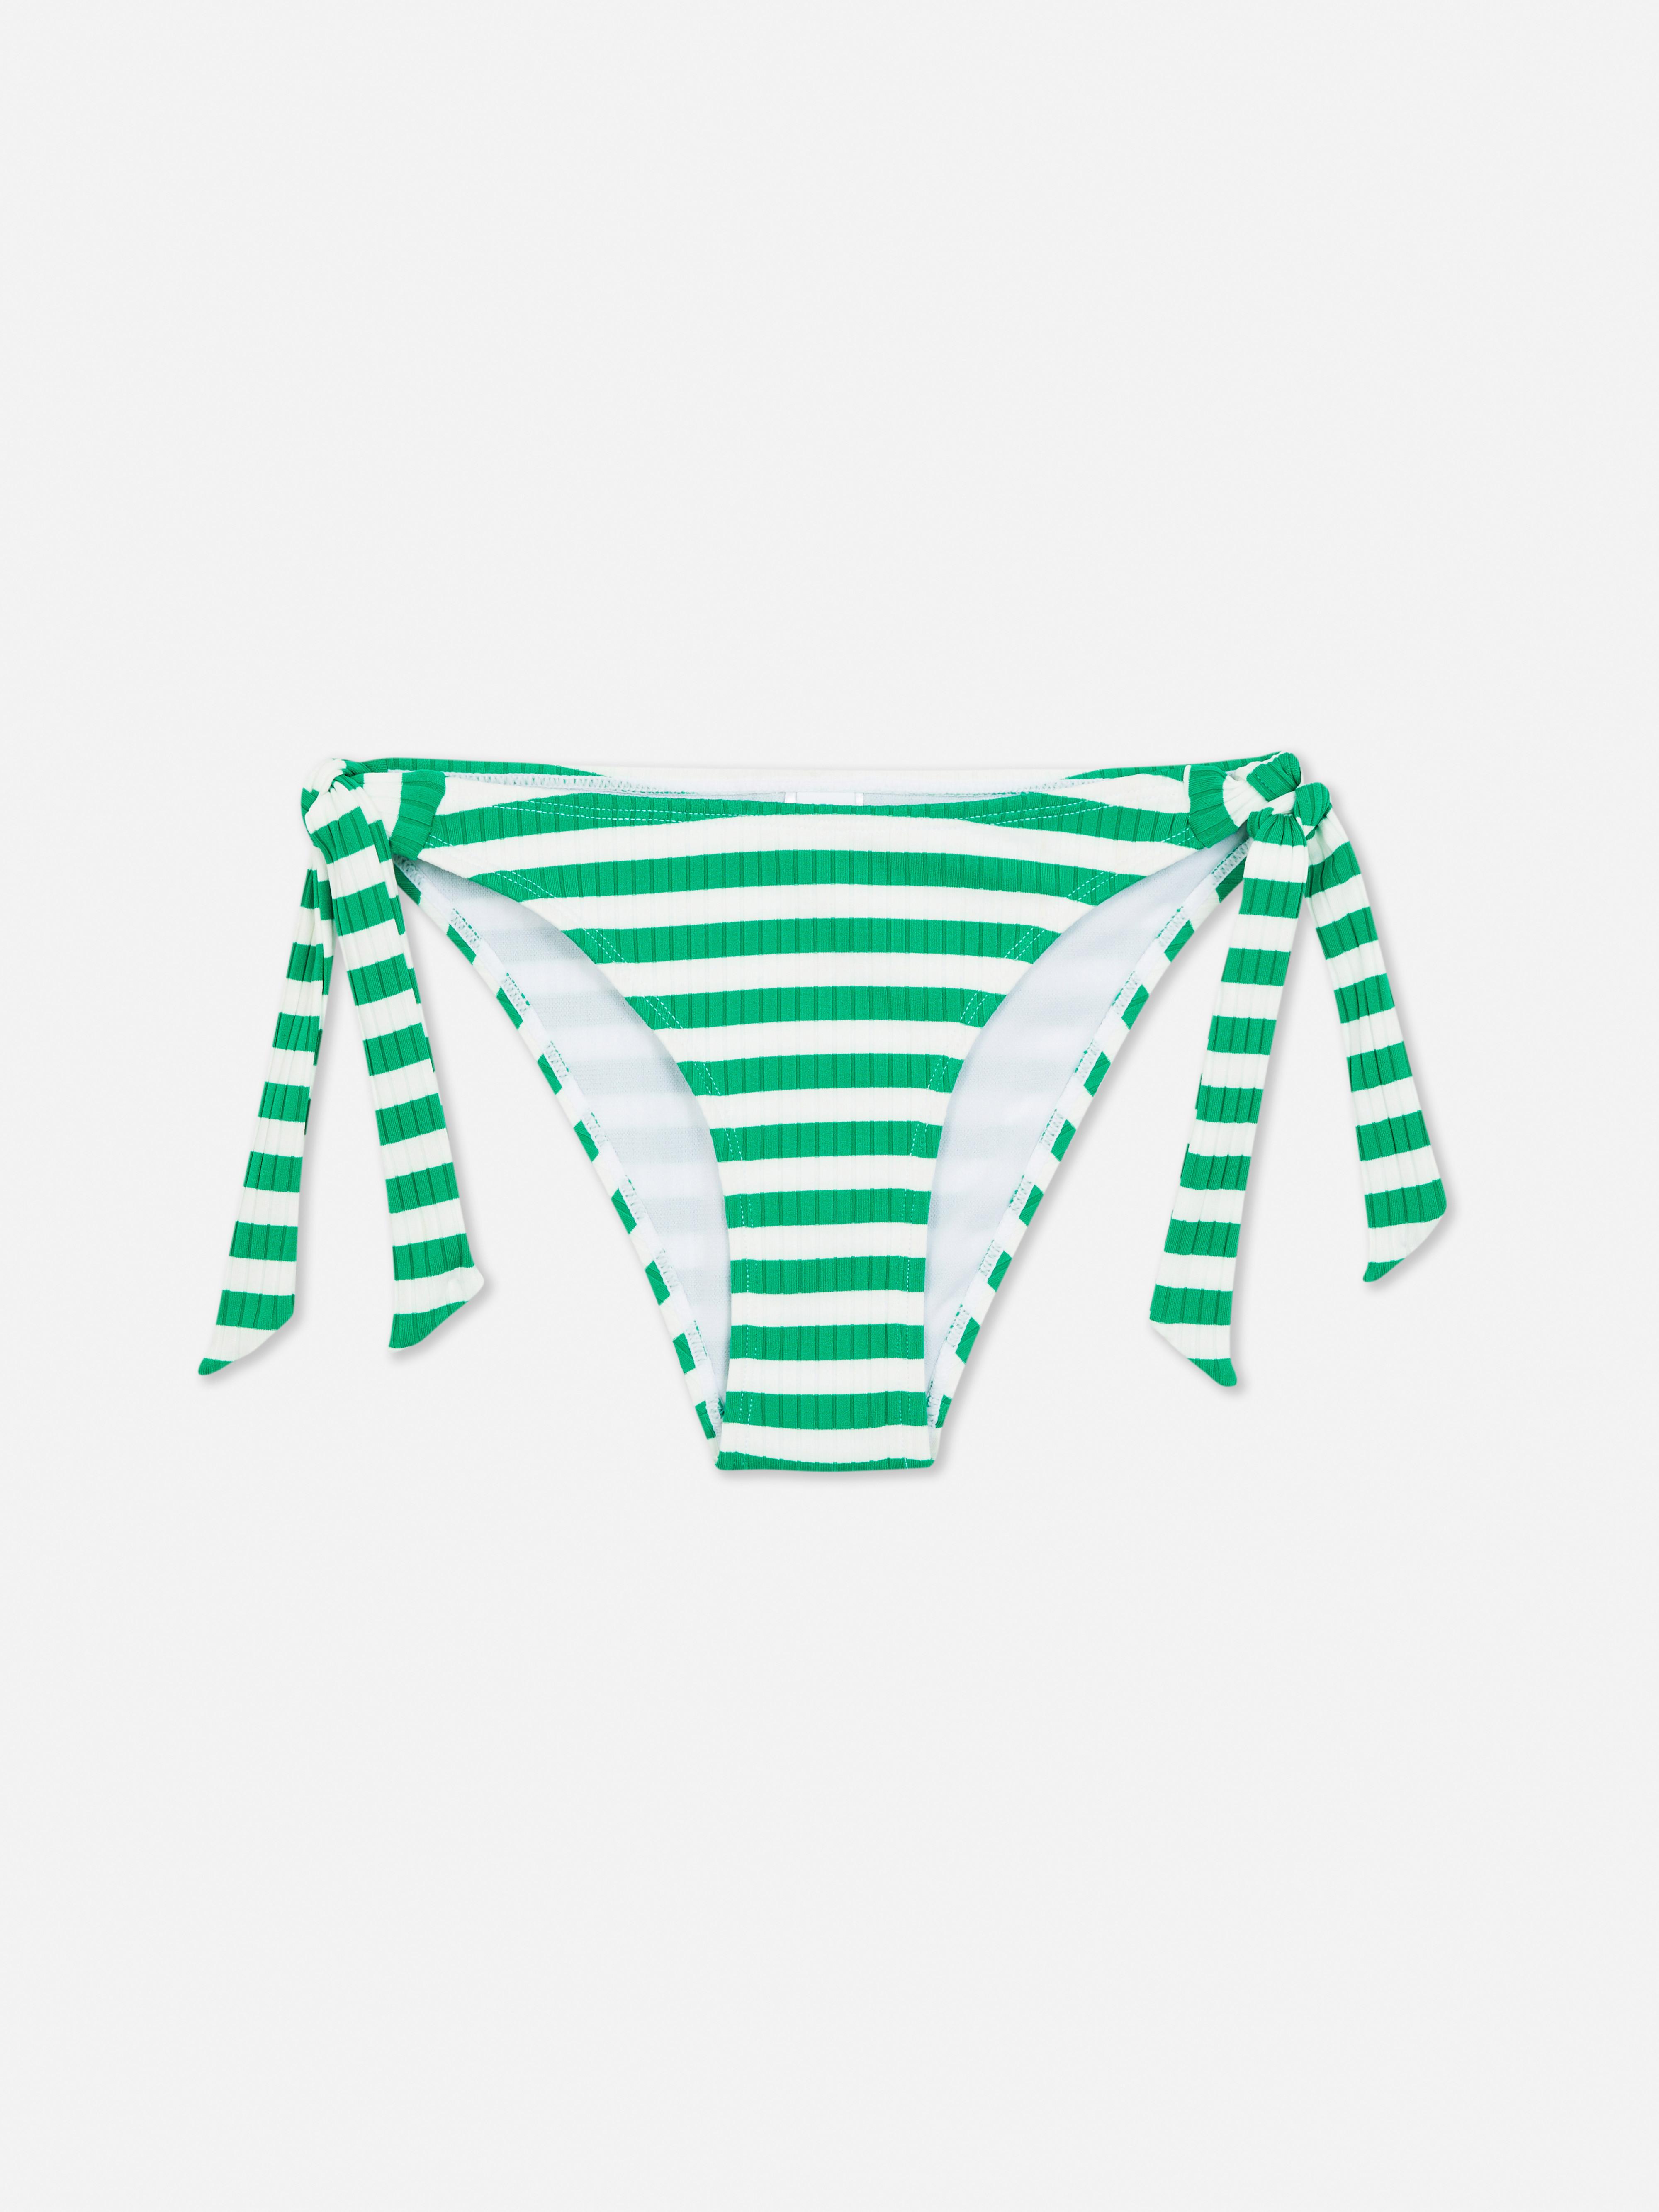 Braguita de bikini a rayas con cordón lateral | Bikinis bañadores | Ropa para | Nuestra línea de moda femenina | Todos los productos Primark | España